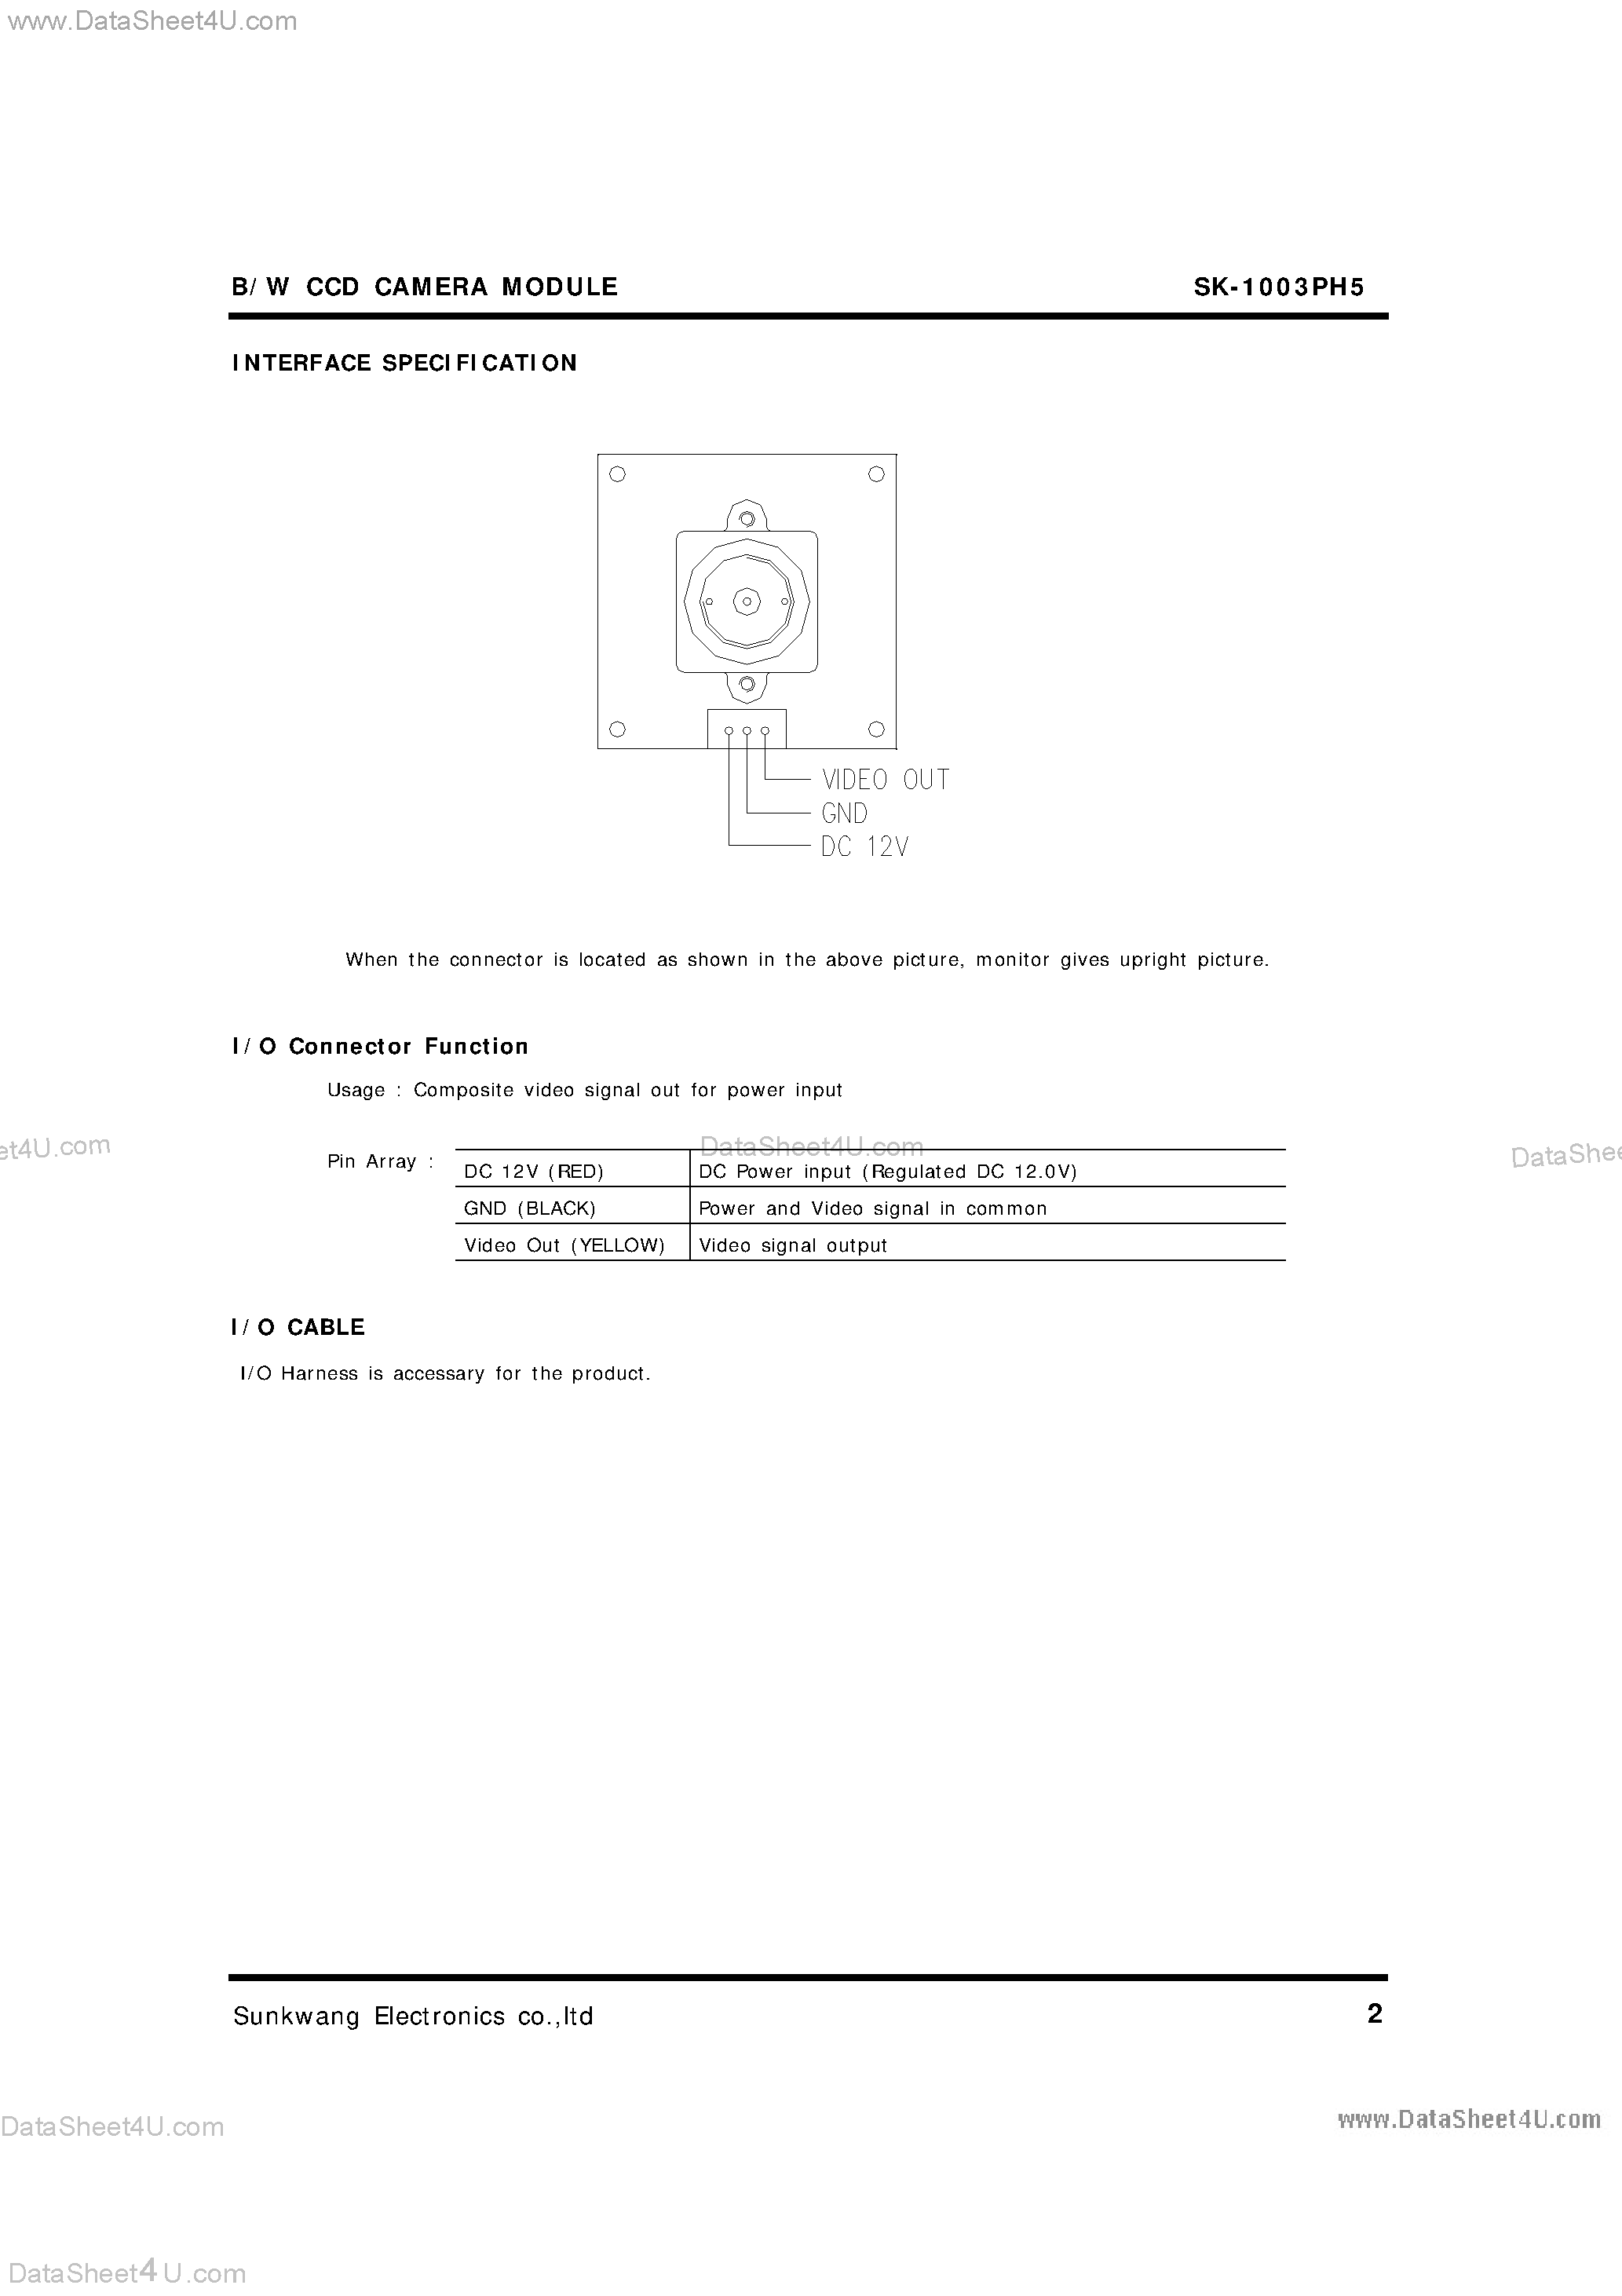 Datasheet SK-1003PH5 - B/W CCD Camera Module page 2